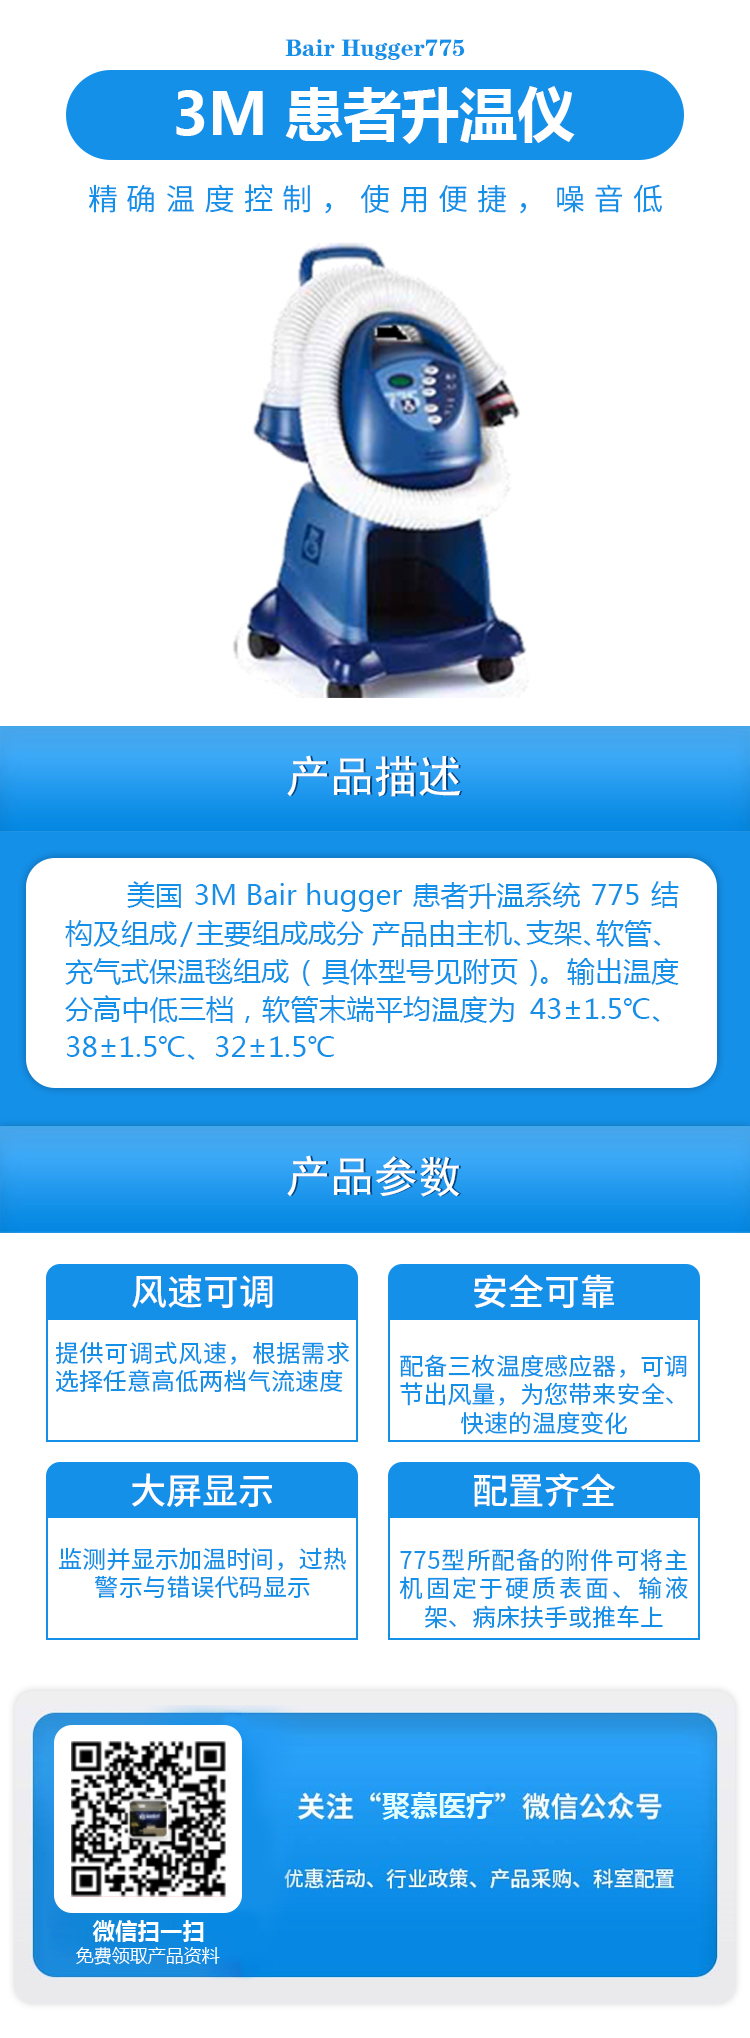 3M患者升溫系統Bair Hugger775升溫儀.jpg